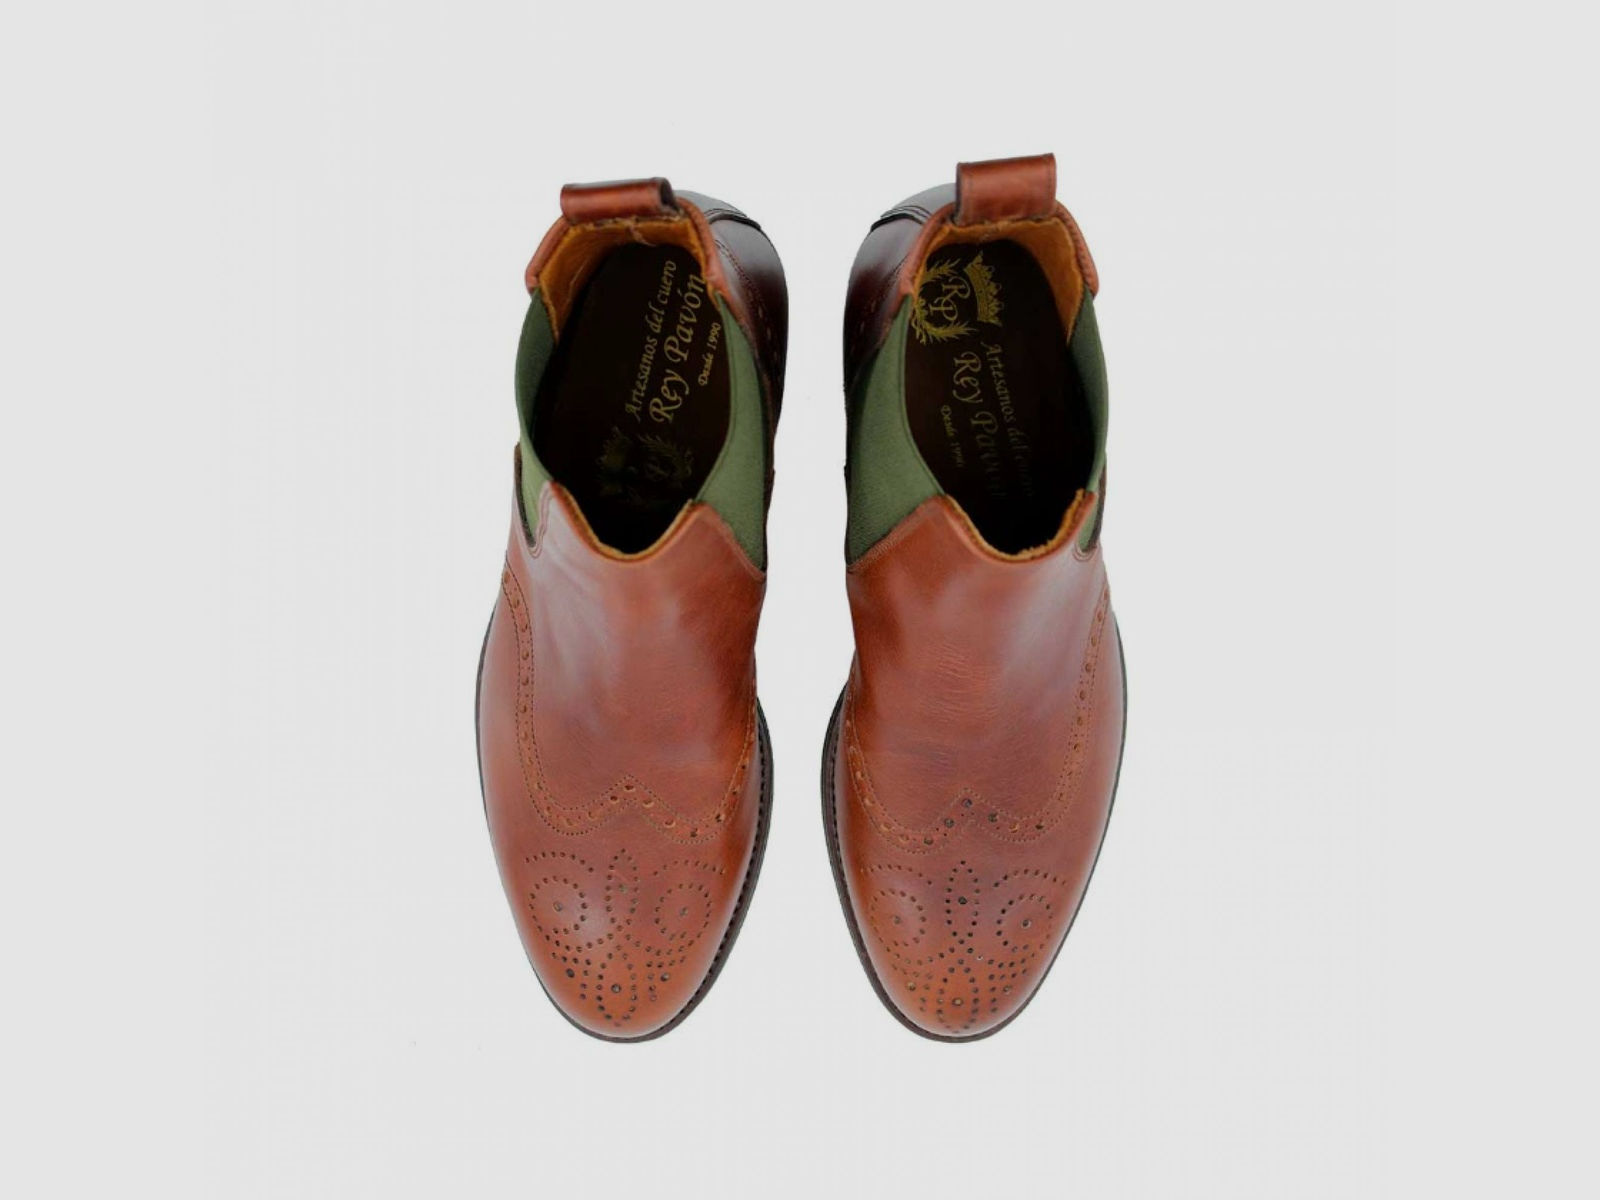 Rey Pavon Damen Schuh Botin Texas, Farbe Braun/Grün 36